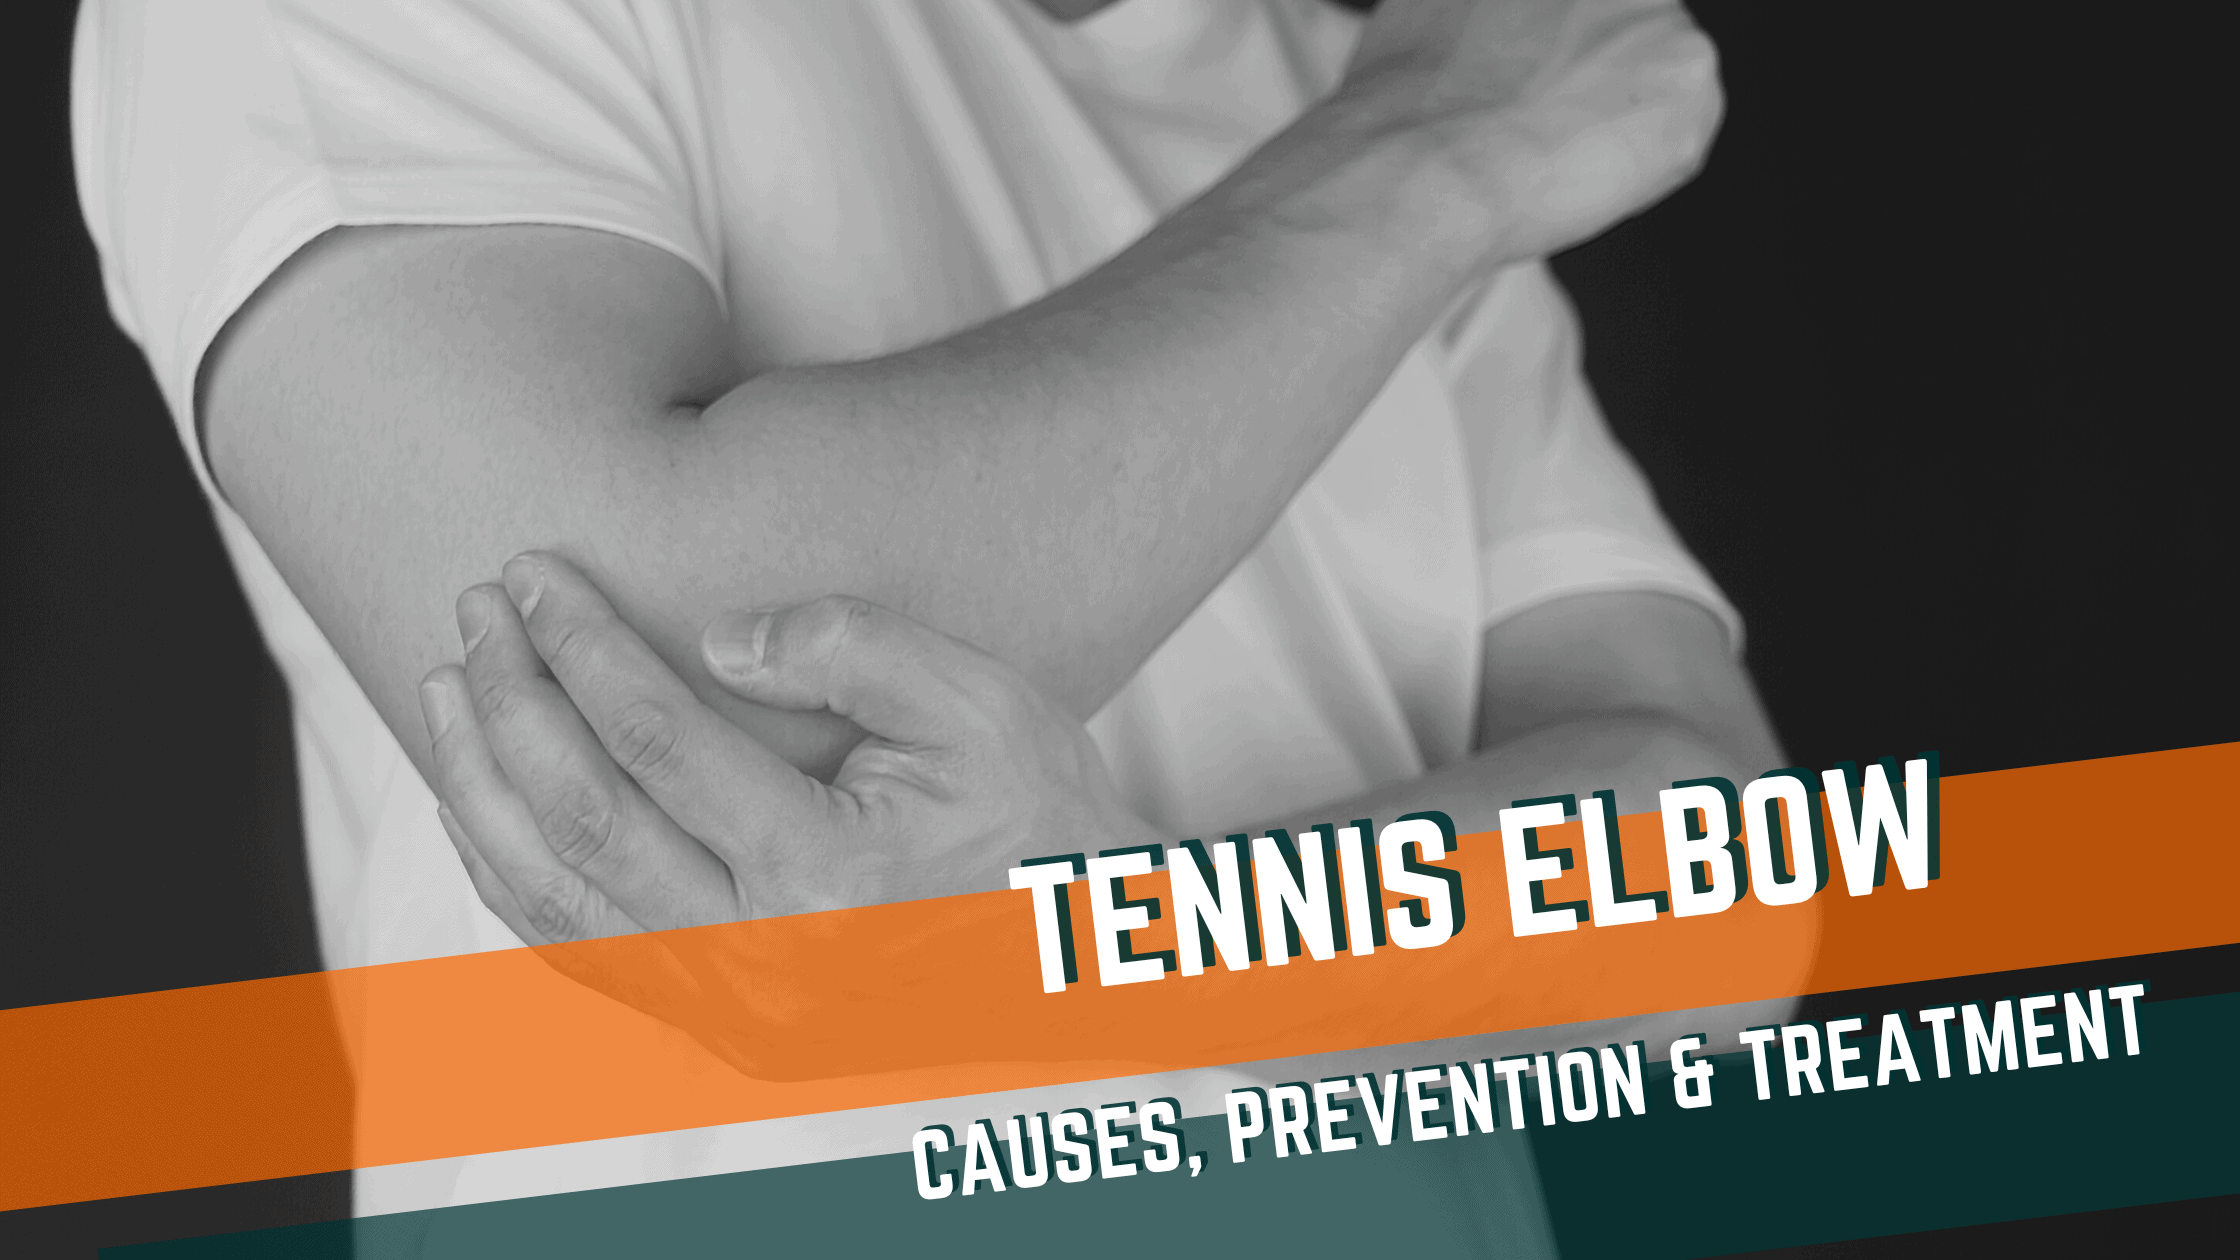 Tennis Elbow: Causes, Prevention & Treatment